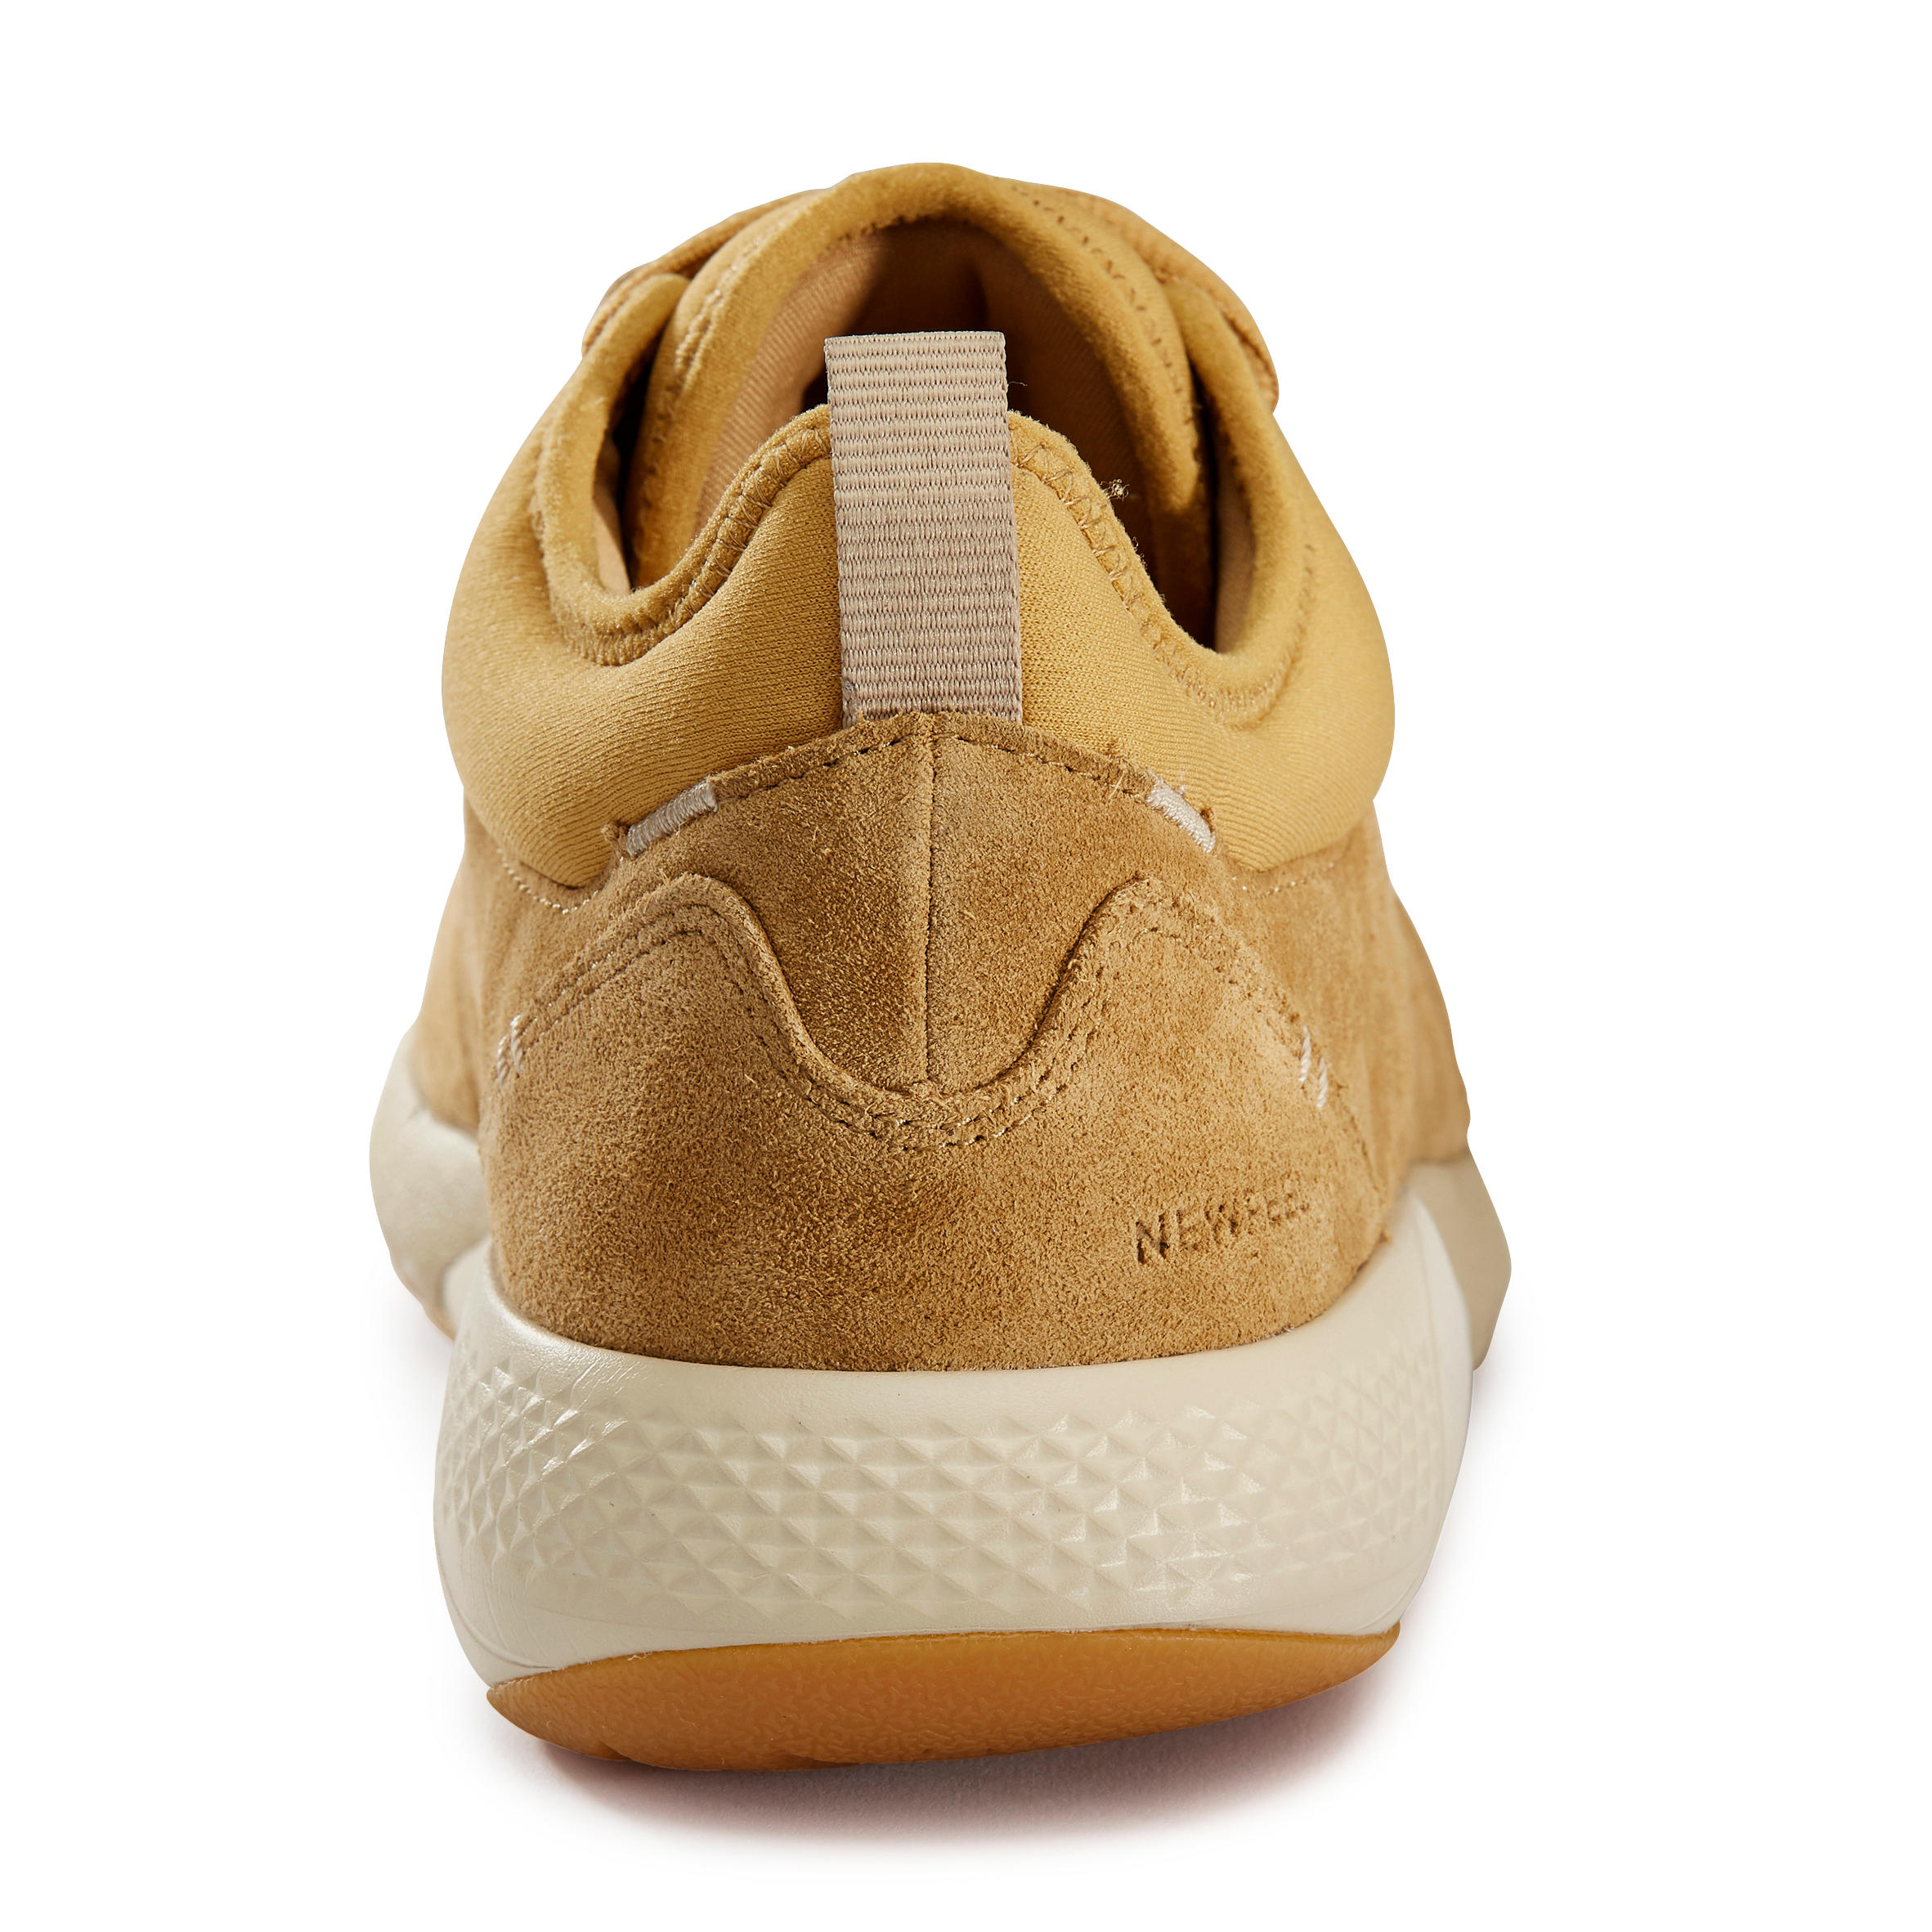 Actiwalk Comfort Leather Men's Urban Walking Shoes - Camel 41/43